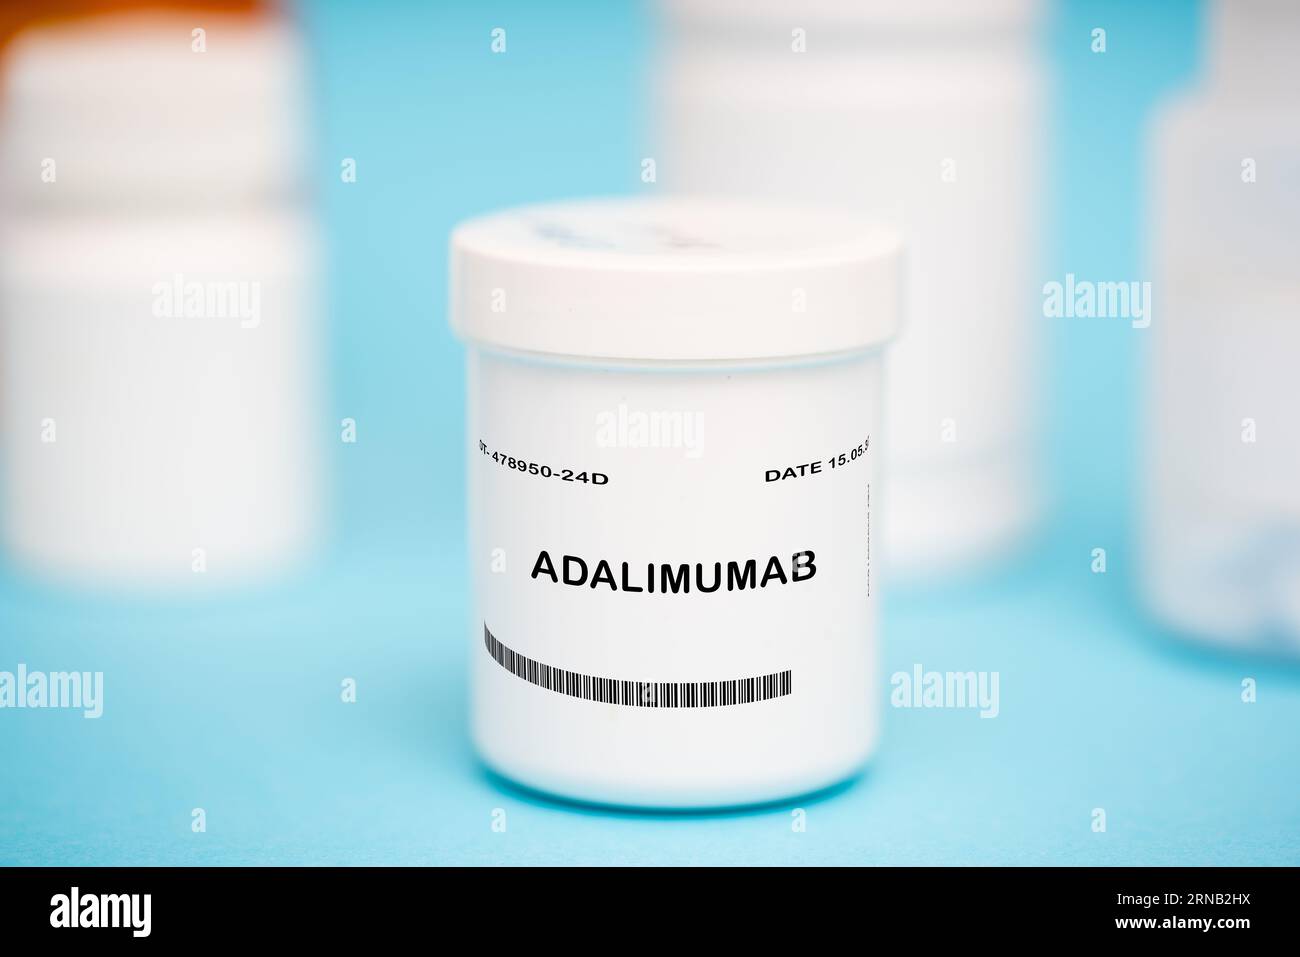 Adalimumab is a biologic medication that is used to treat autoimmune diseases such as rheumatoid arthritis, psoriasis, and Crohn's disease. It is admi Stock Photo